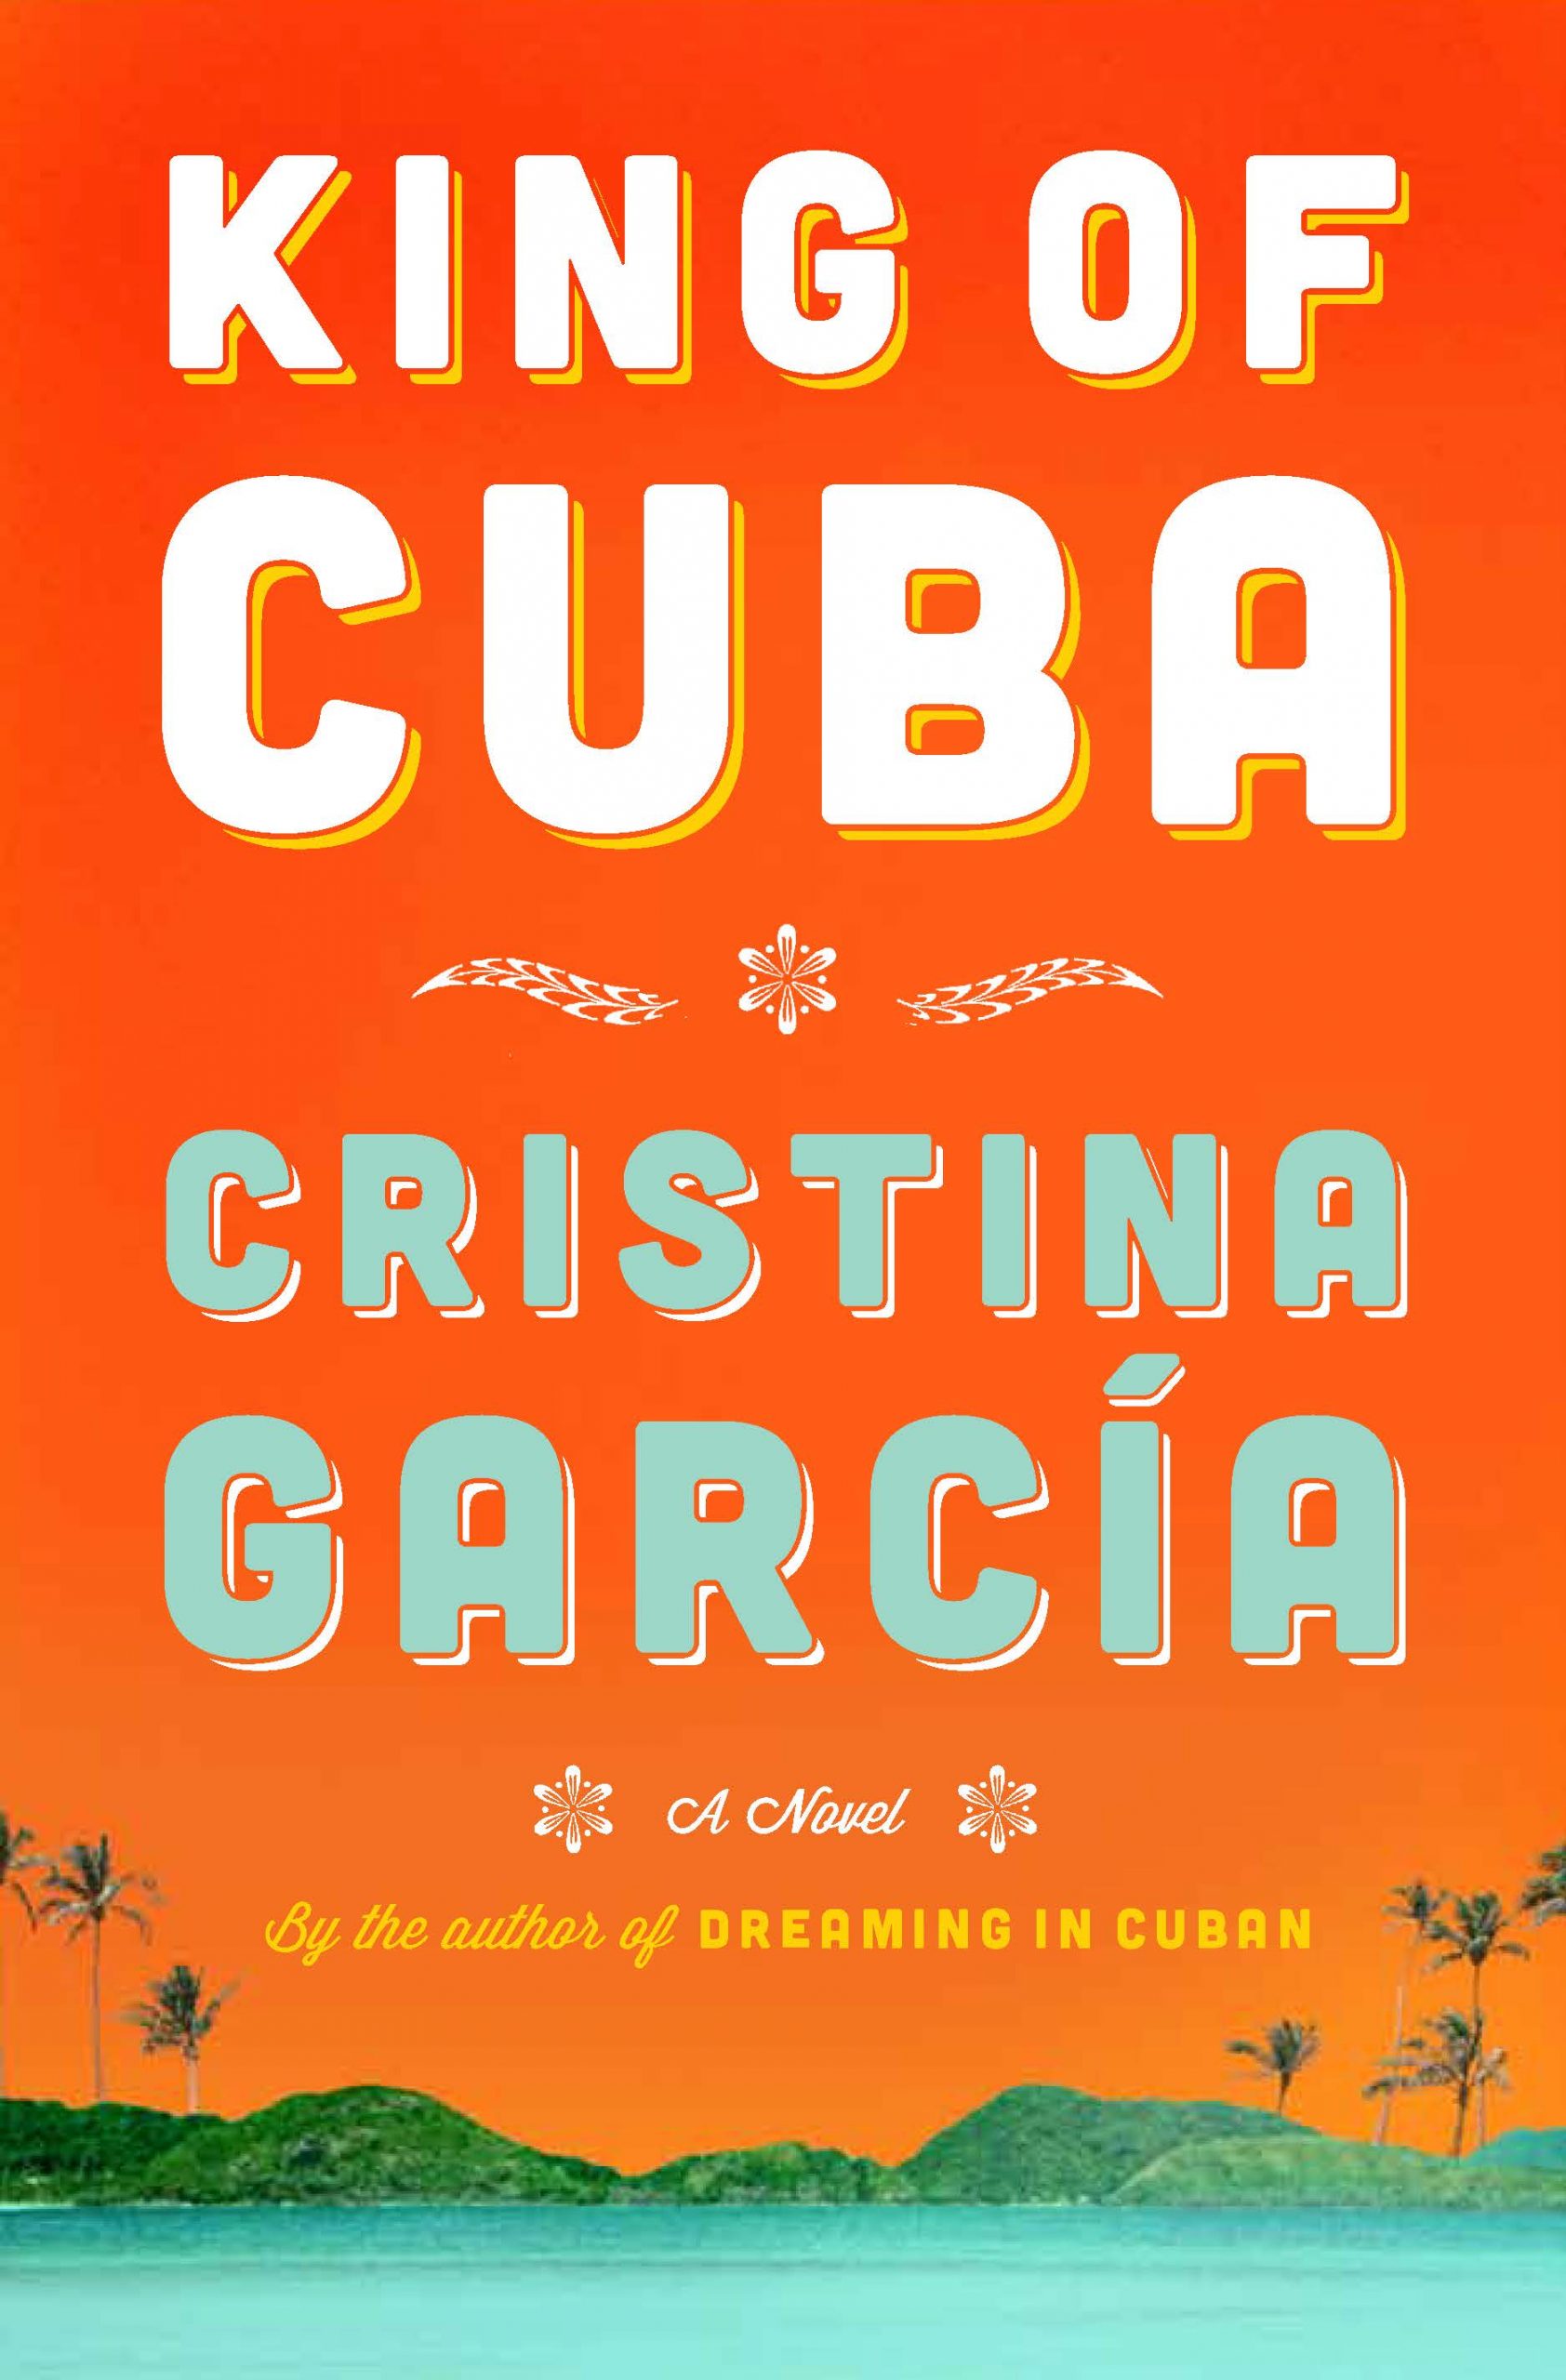 King Of Cuba by Cristina Garcia